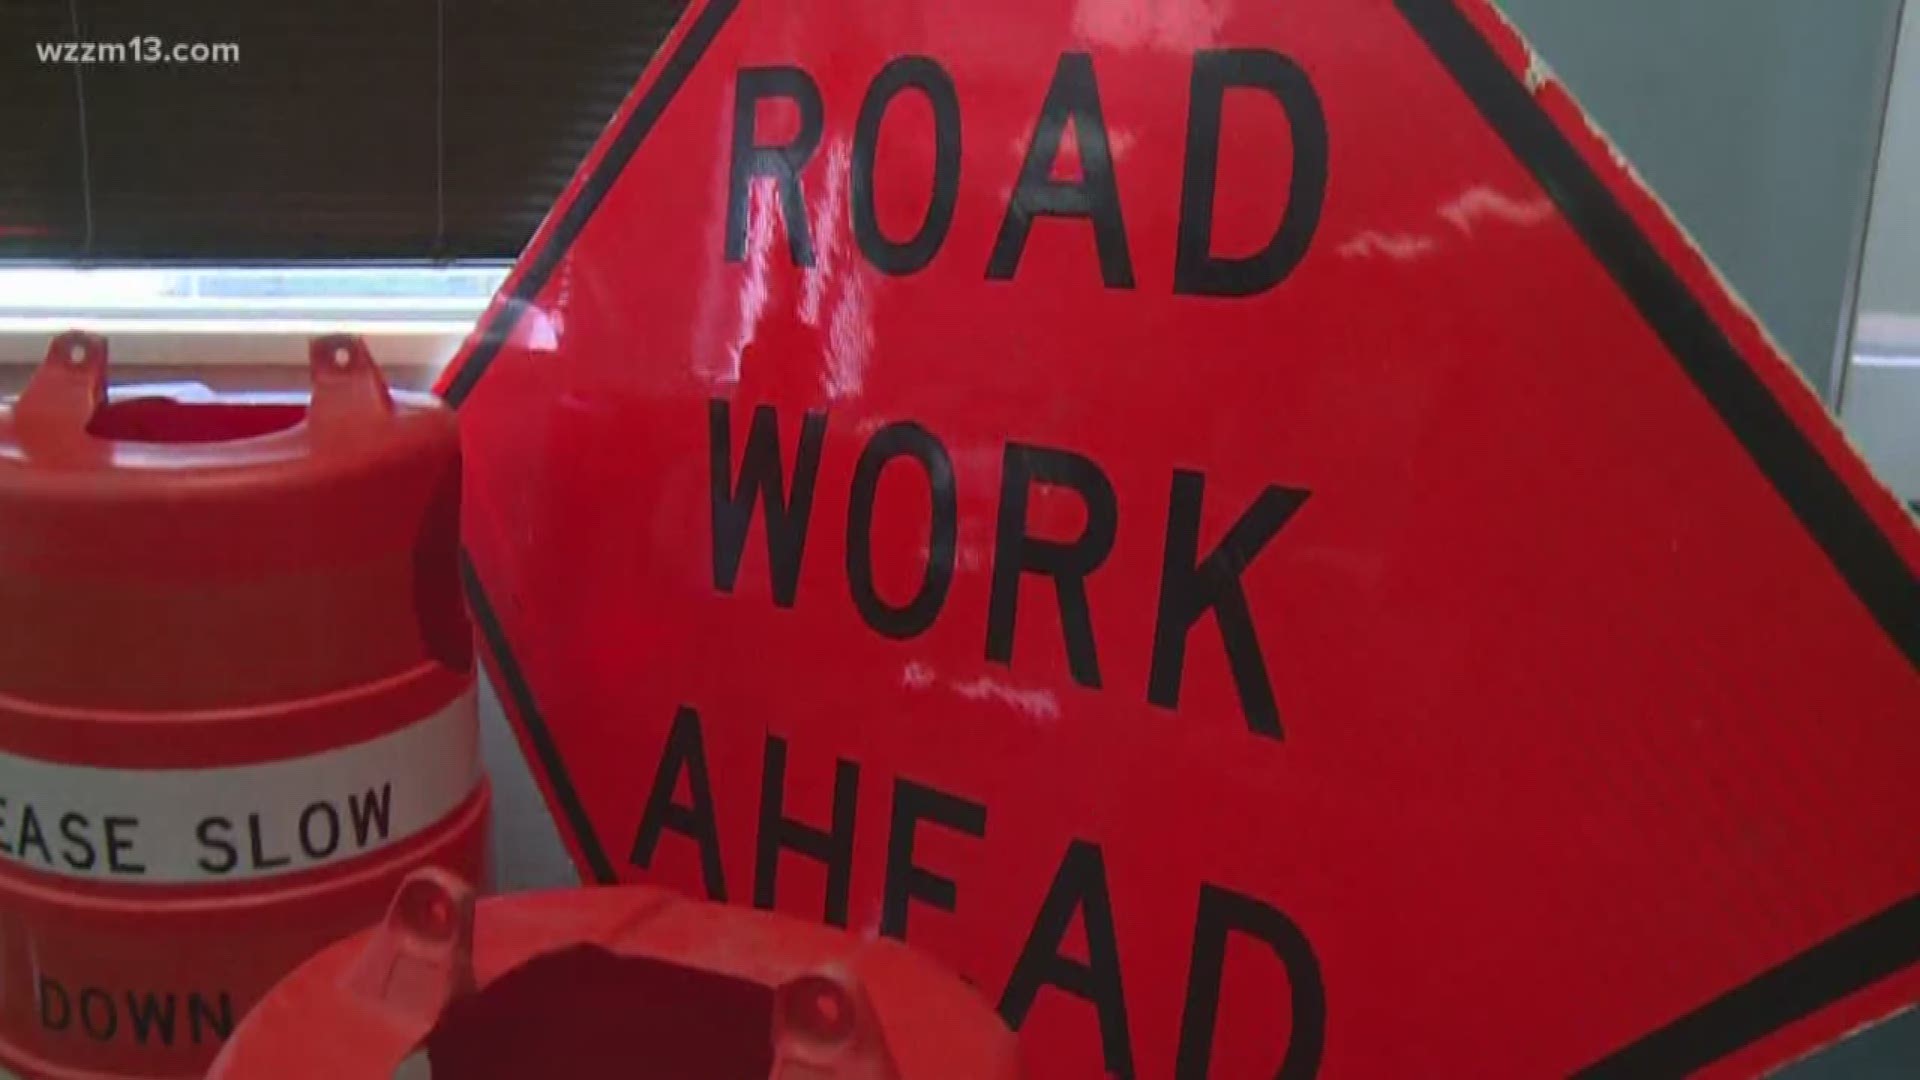 Safe driving initiatives underway in West Michigan